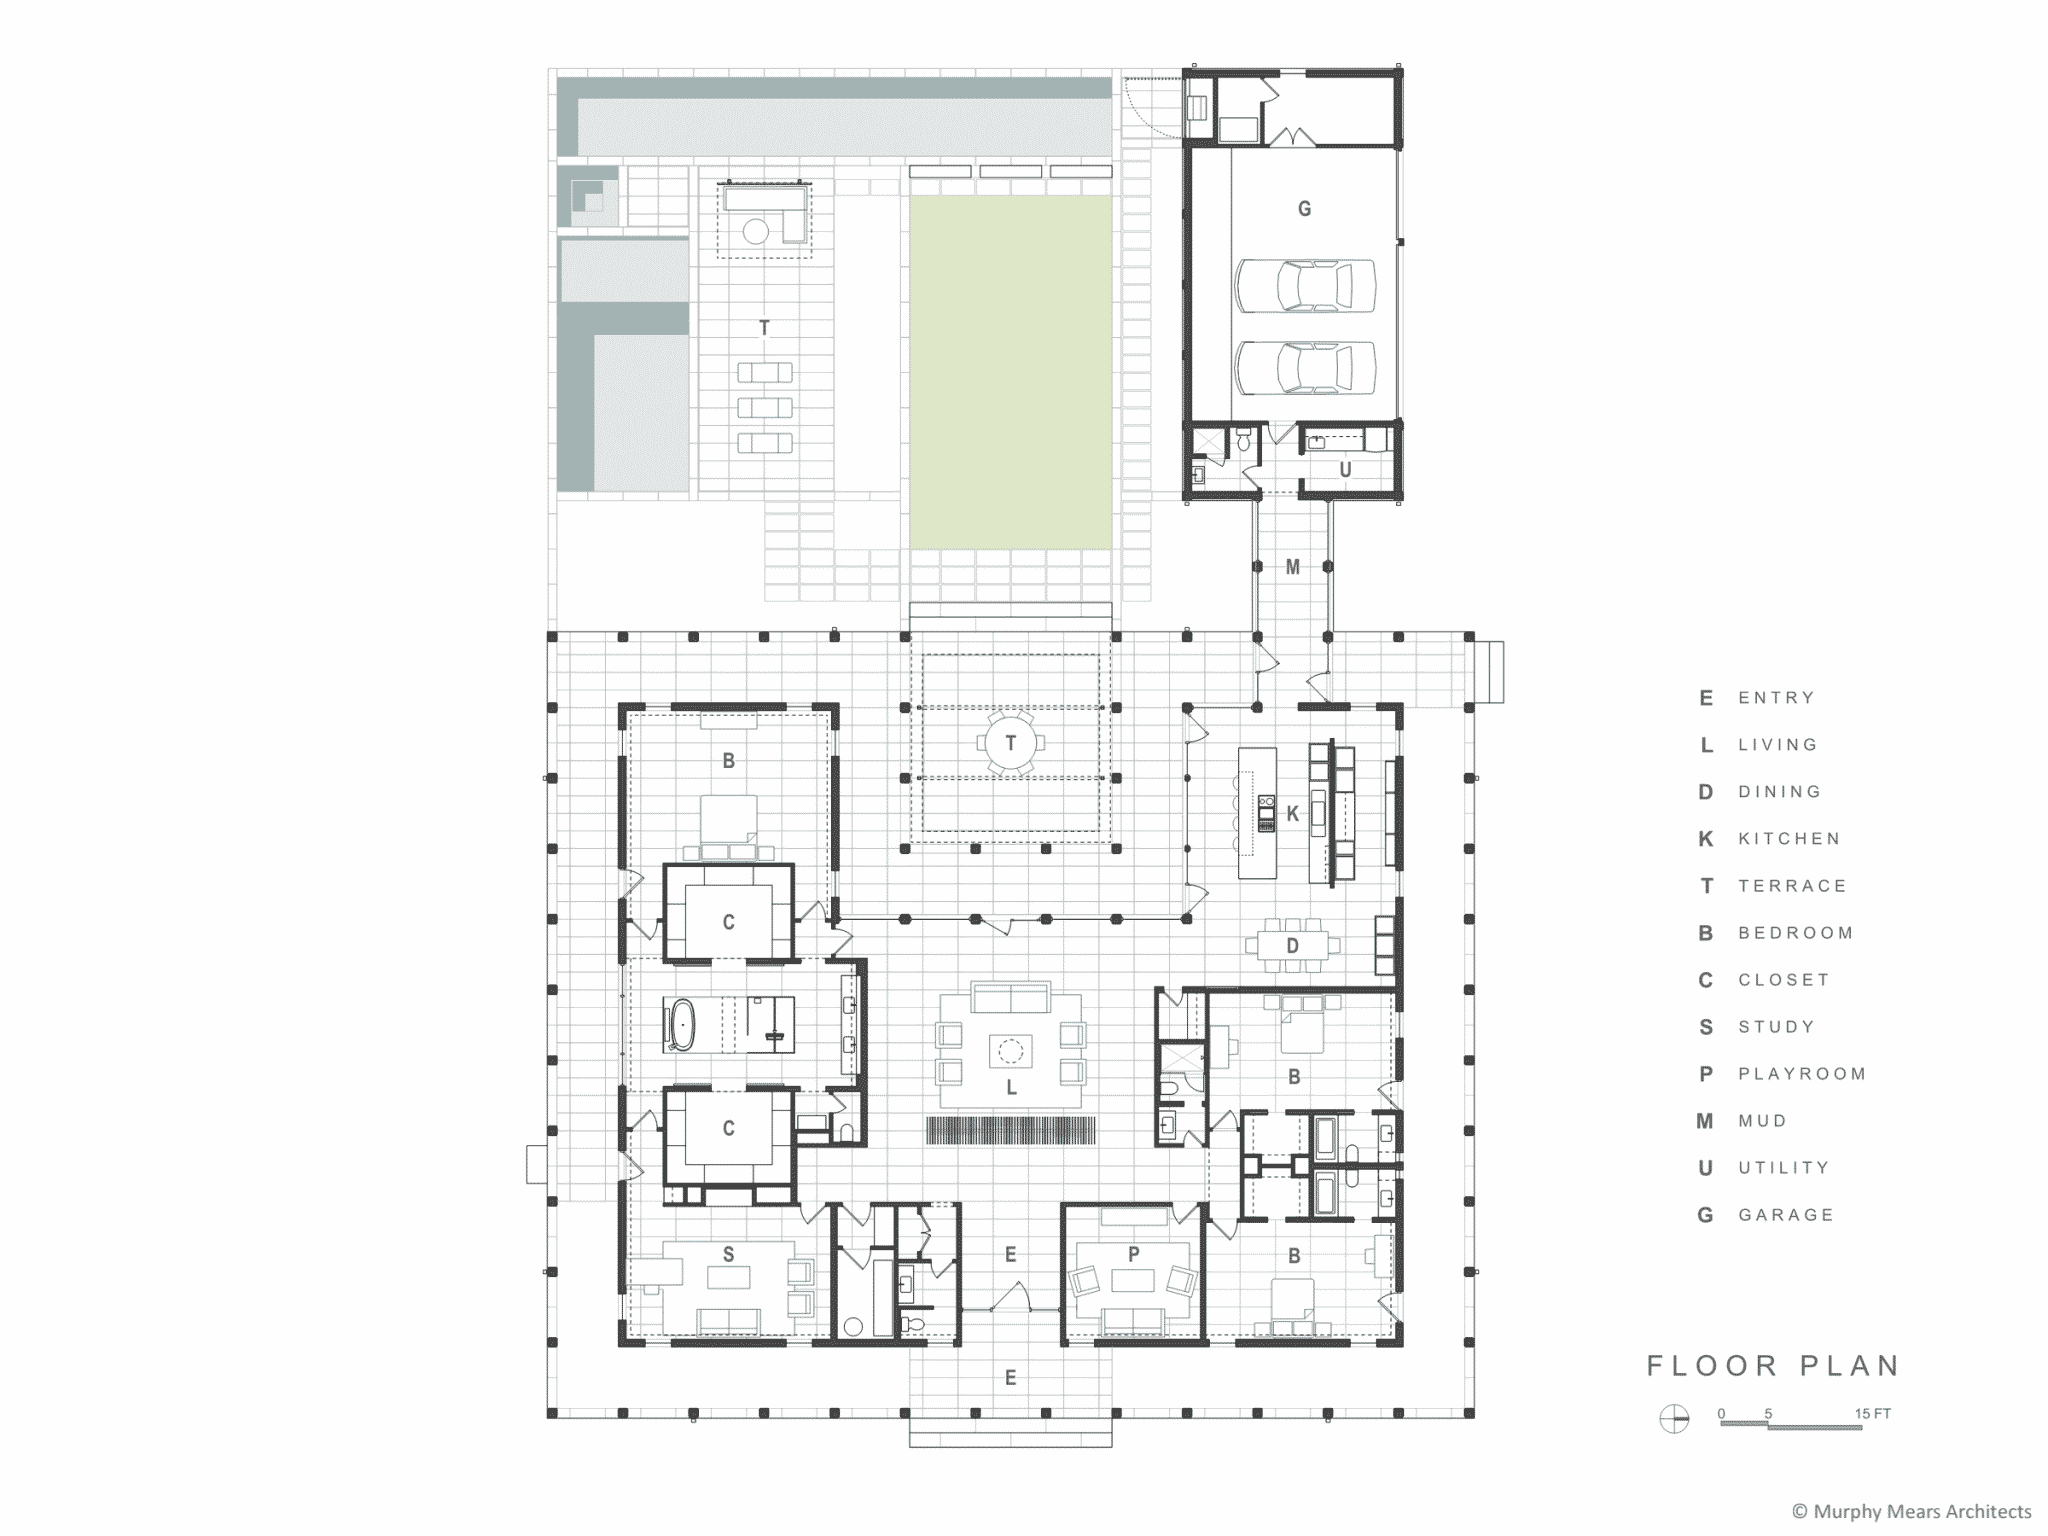 Reconfigured floor plan and back yard.